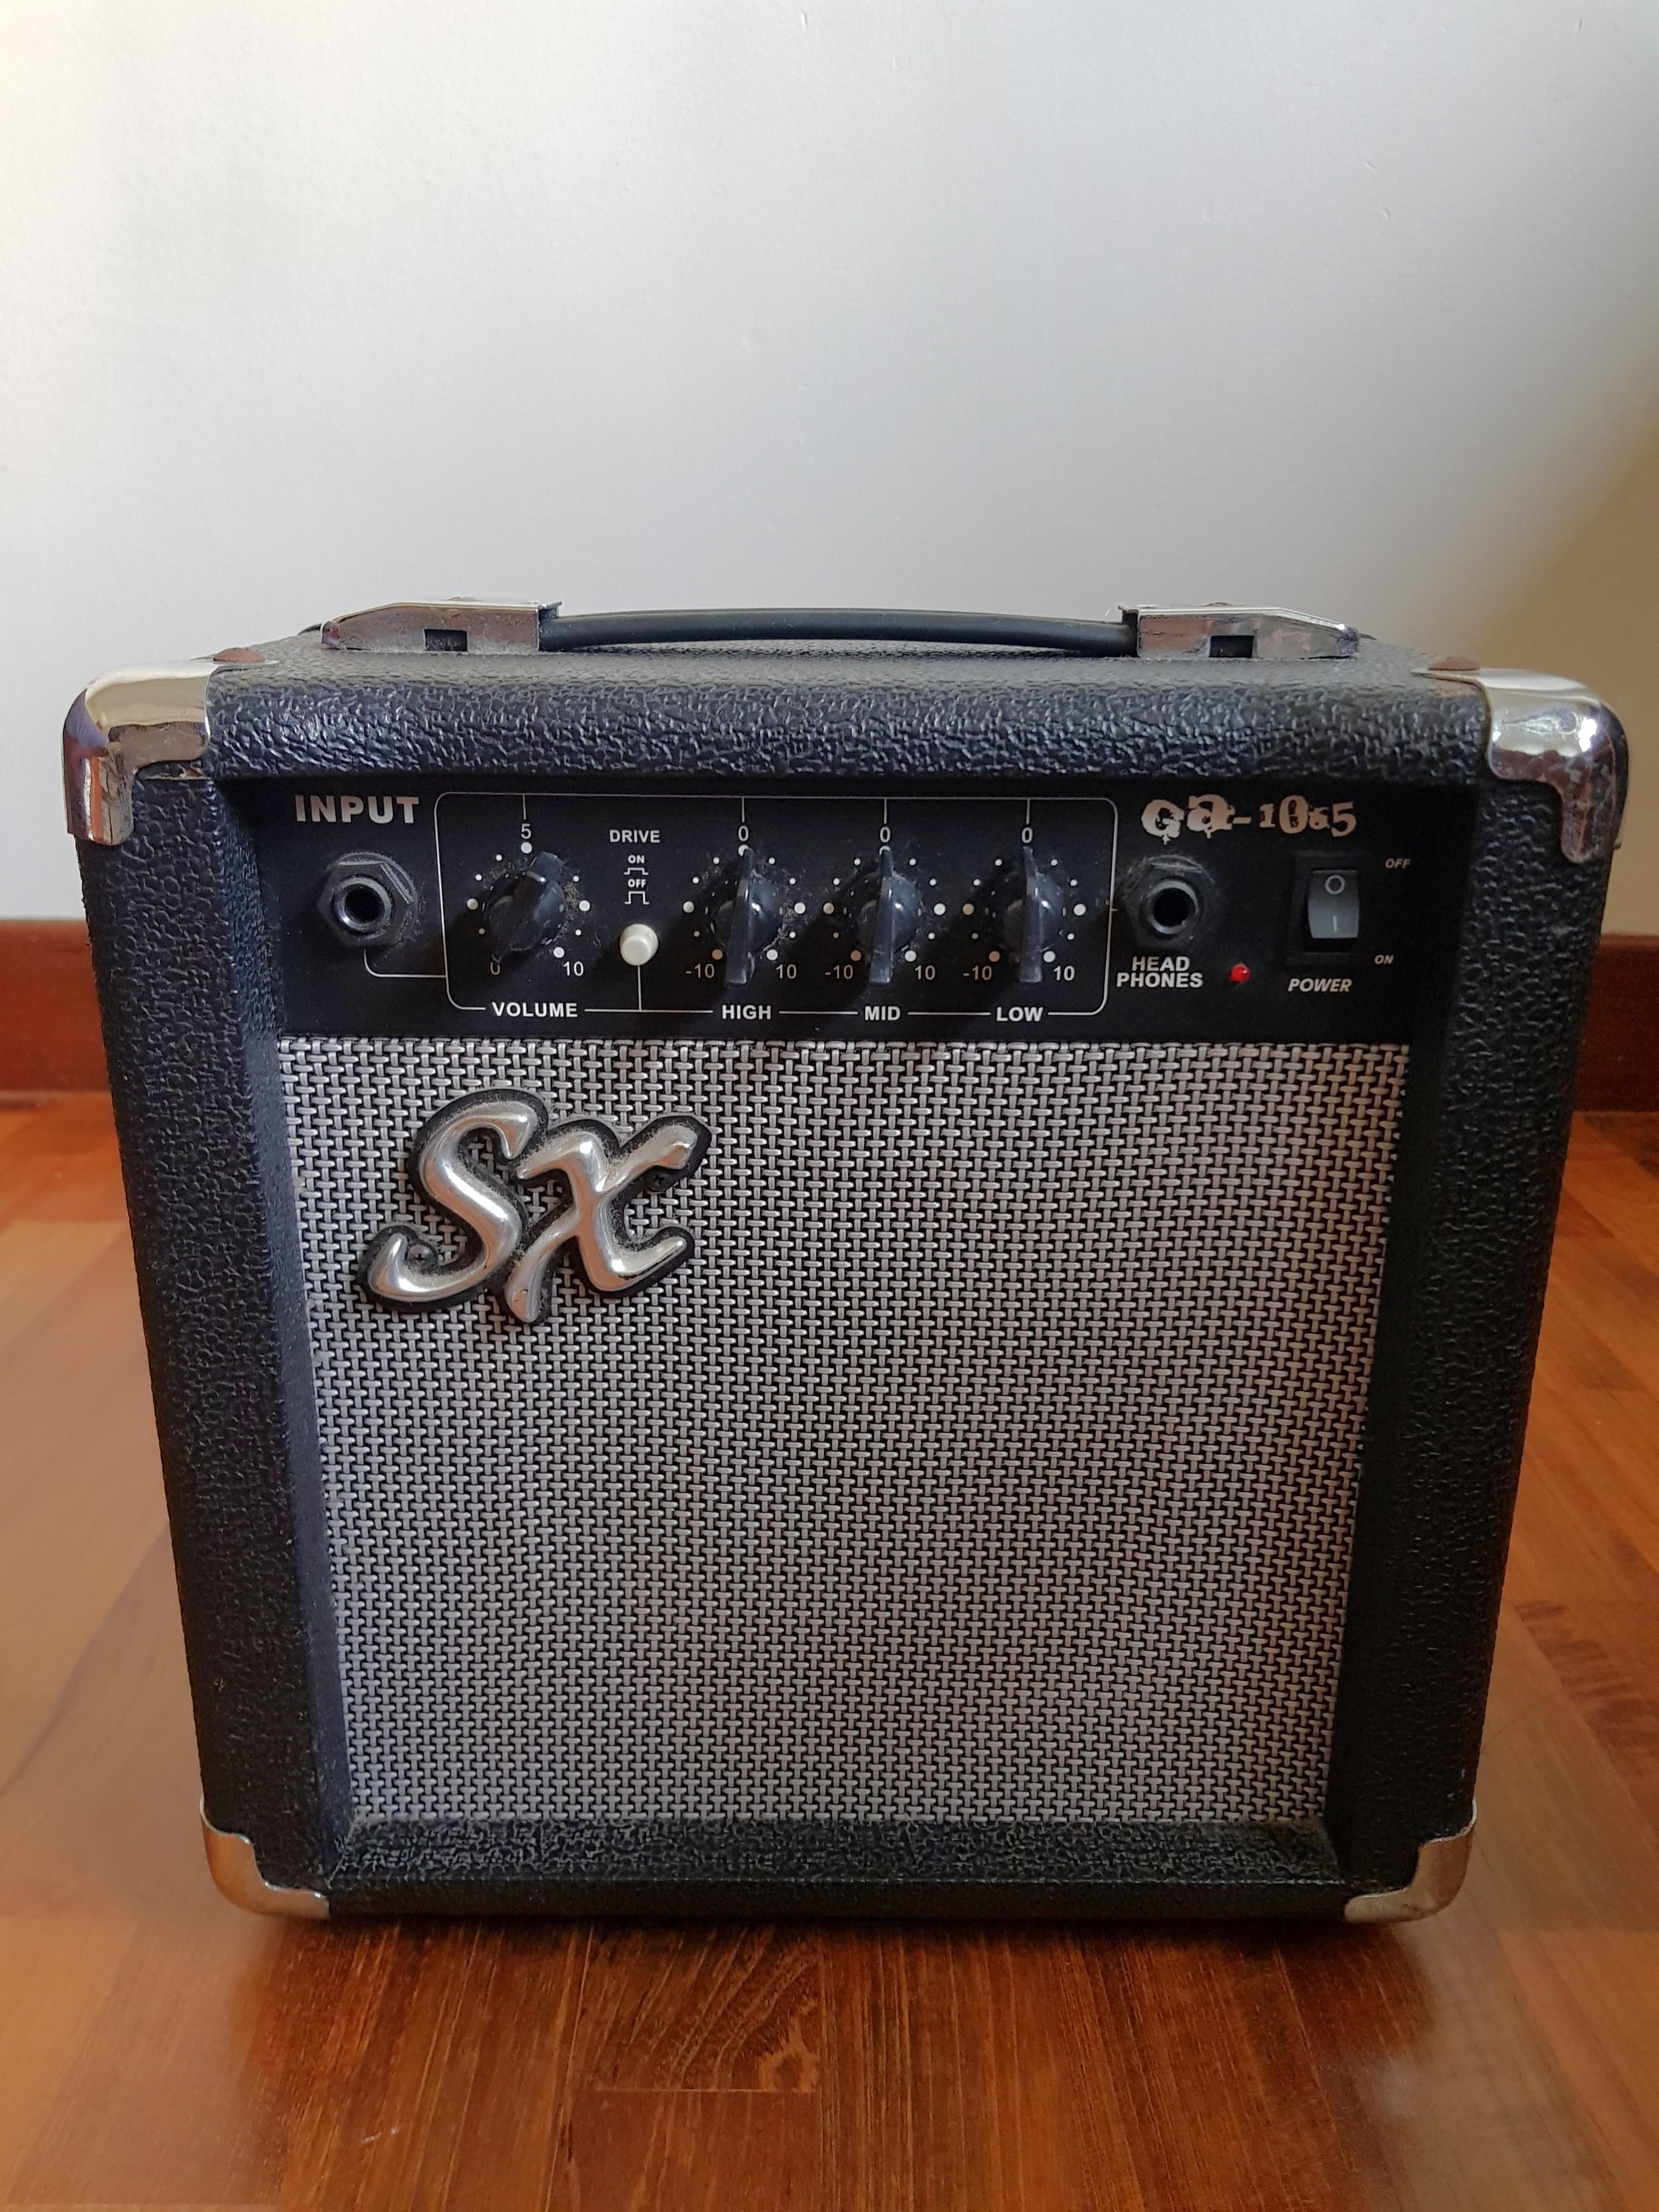 SX GA-1065 Guitar Amplifier